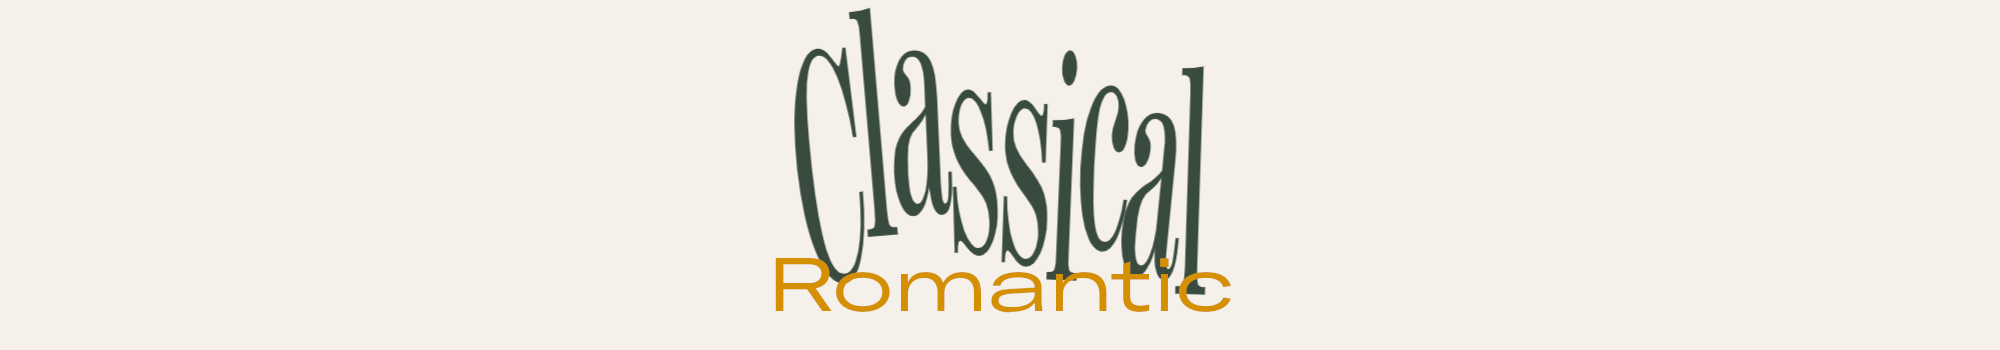 Rubrik till kategori: Classical - Romantic